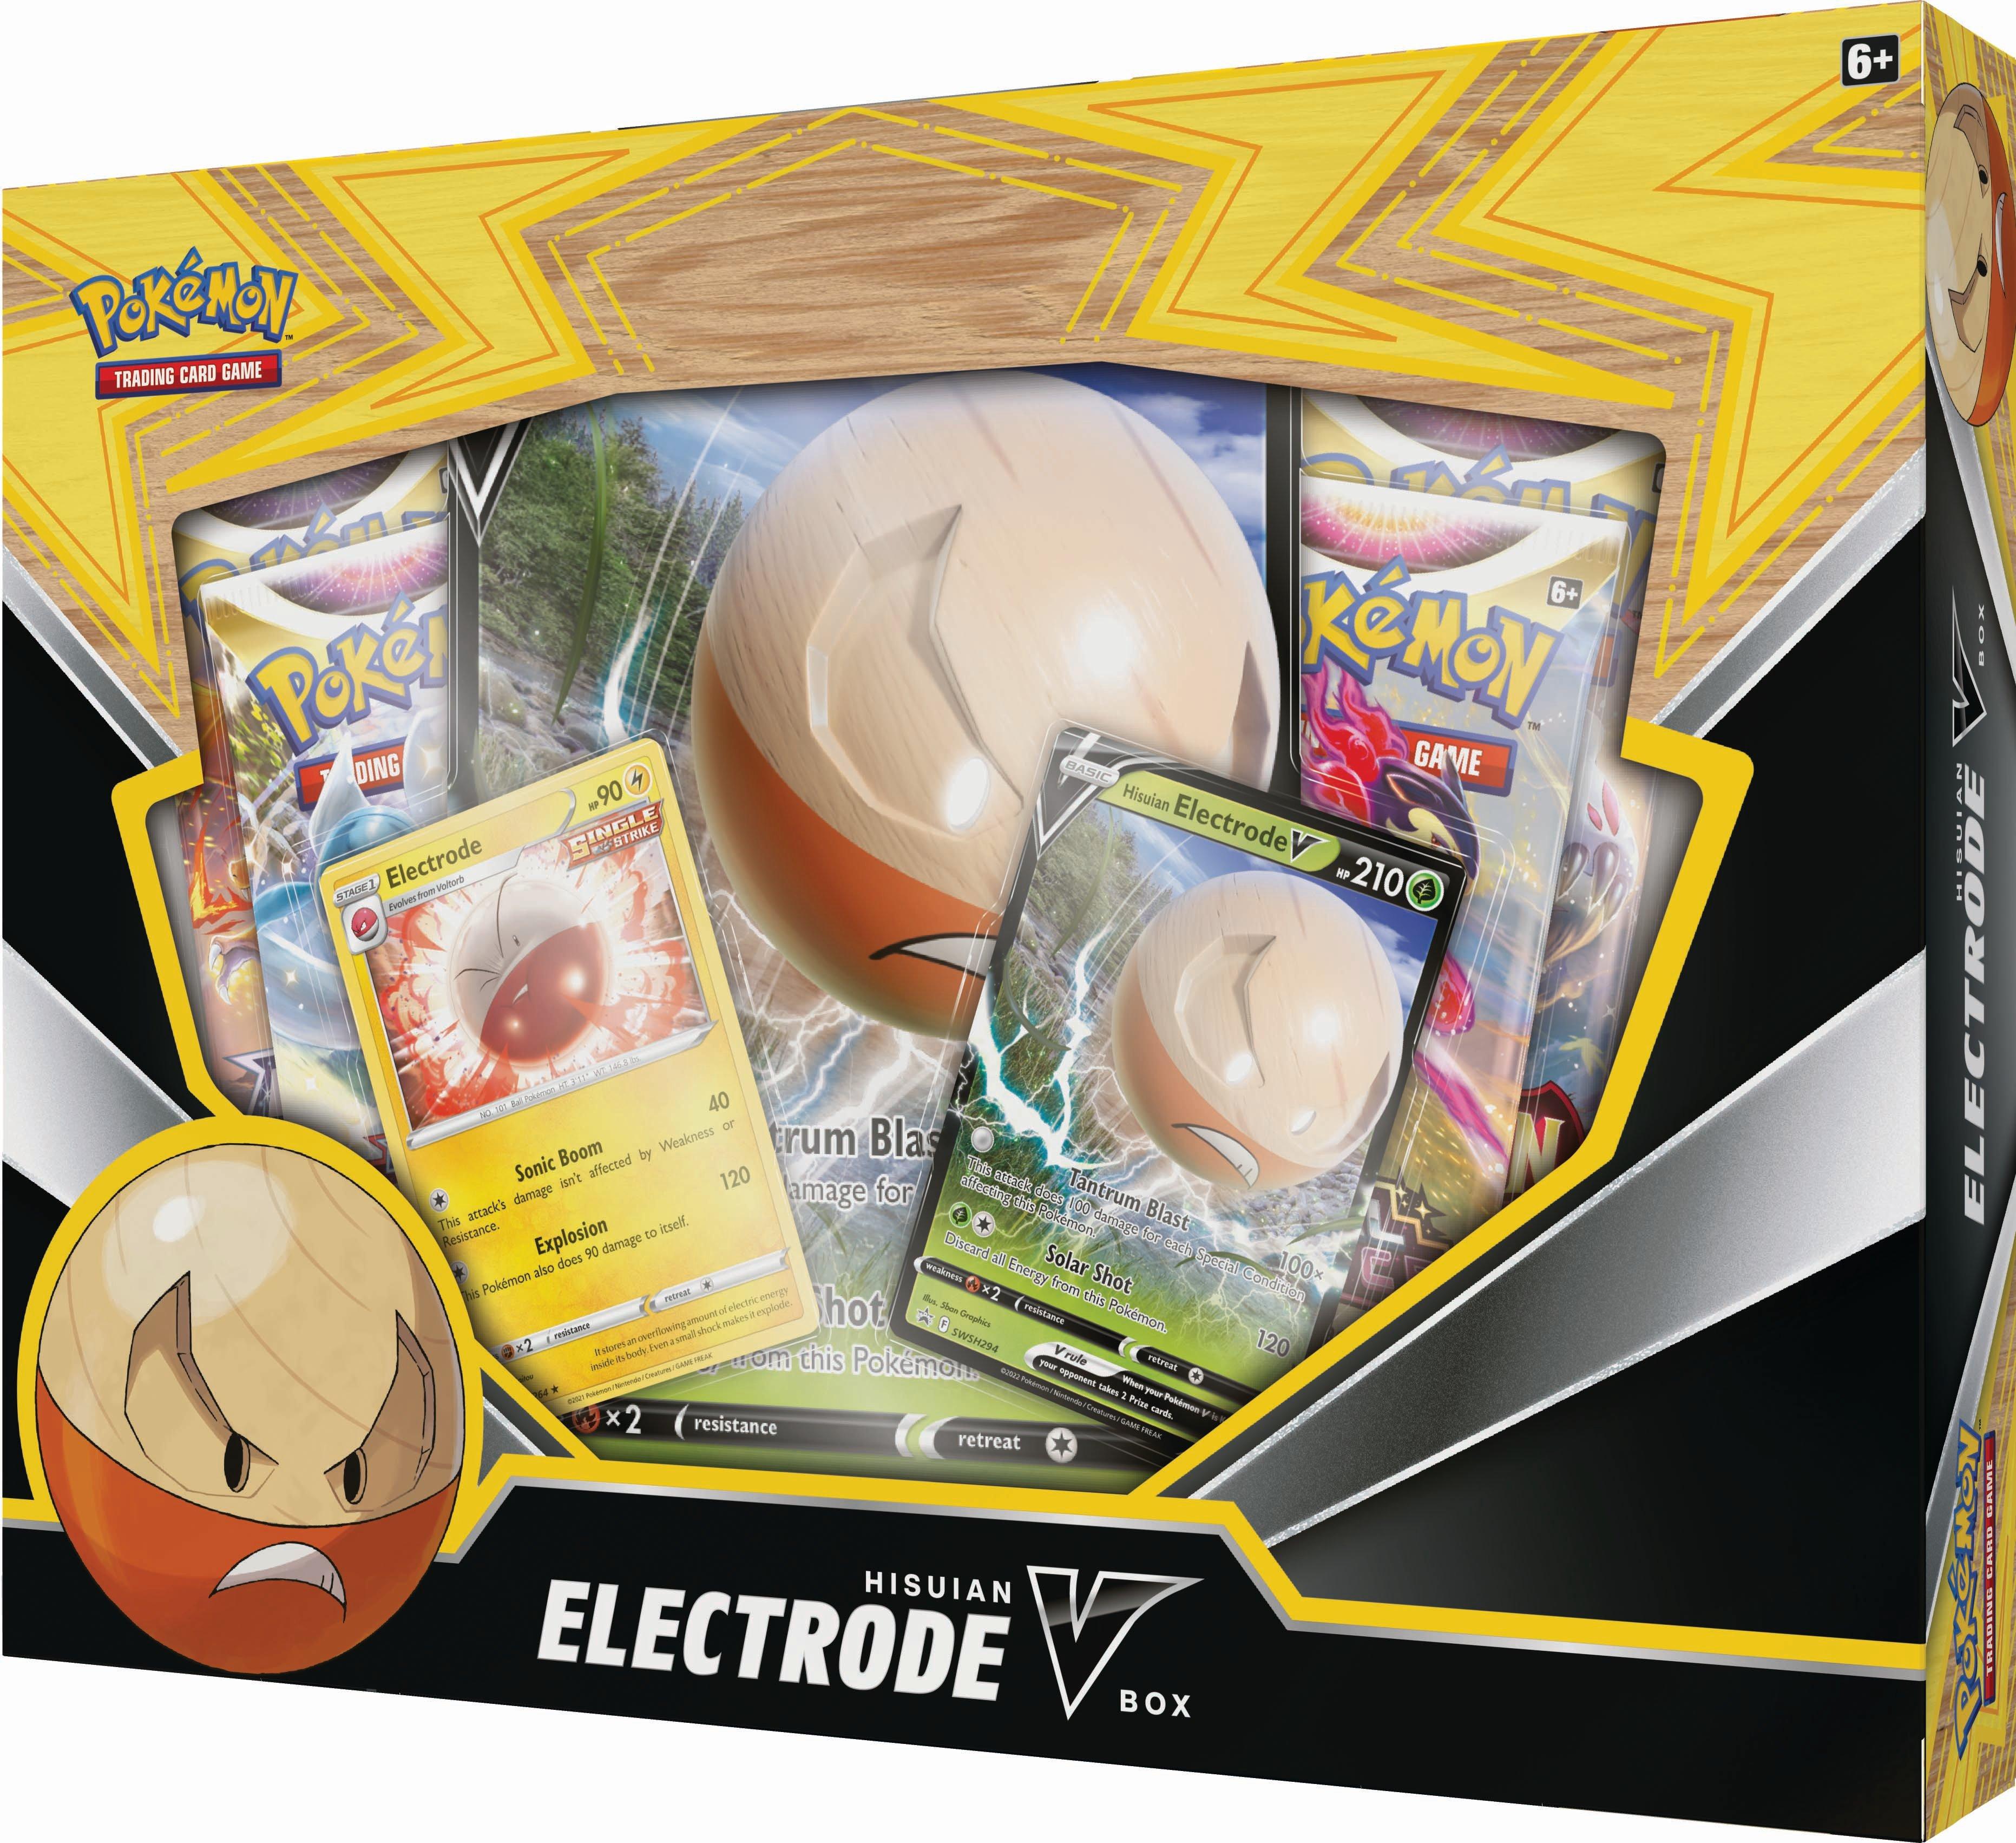 list item 3 of 6 Pokemon Trading Card Game: Hisuian Electrode V Box